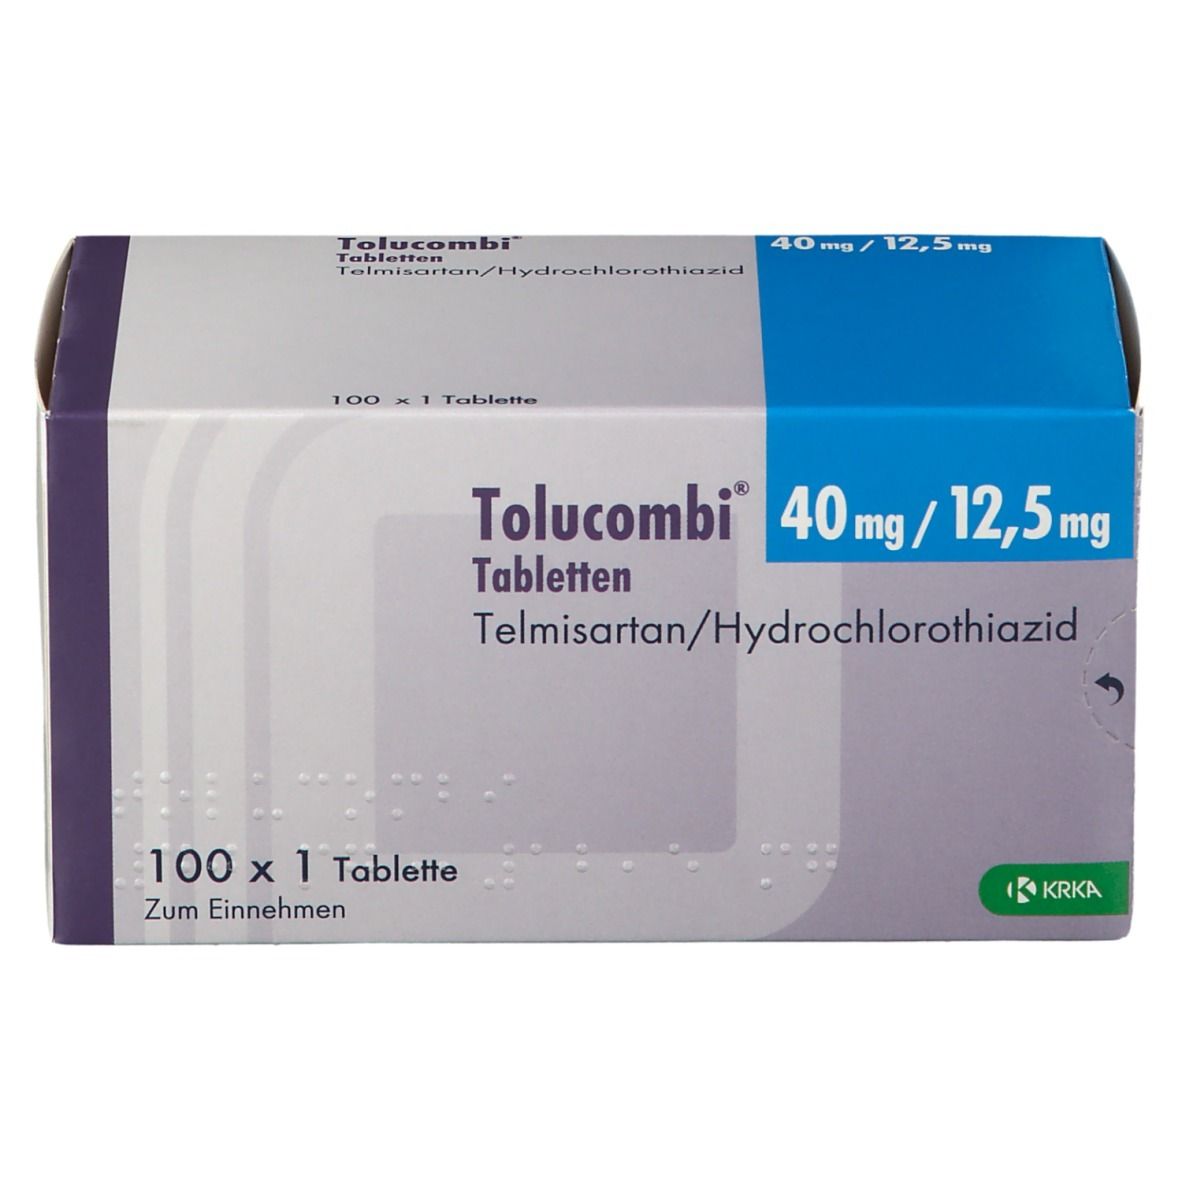 Tolucombi® 40 mg/12,5 mg